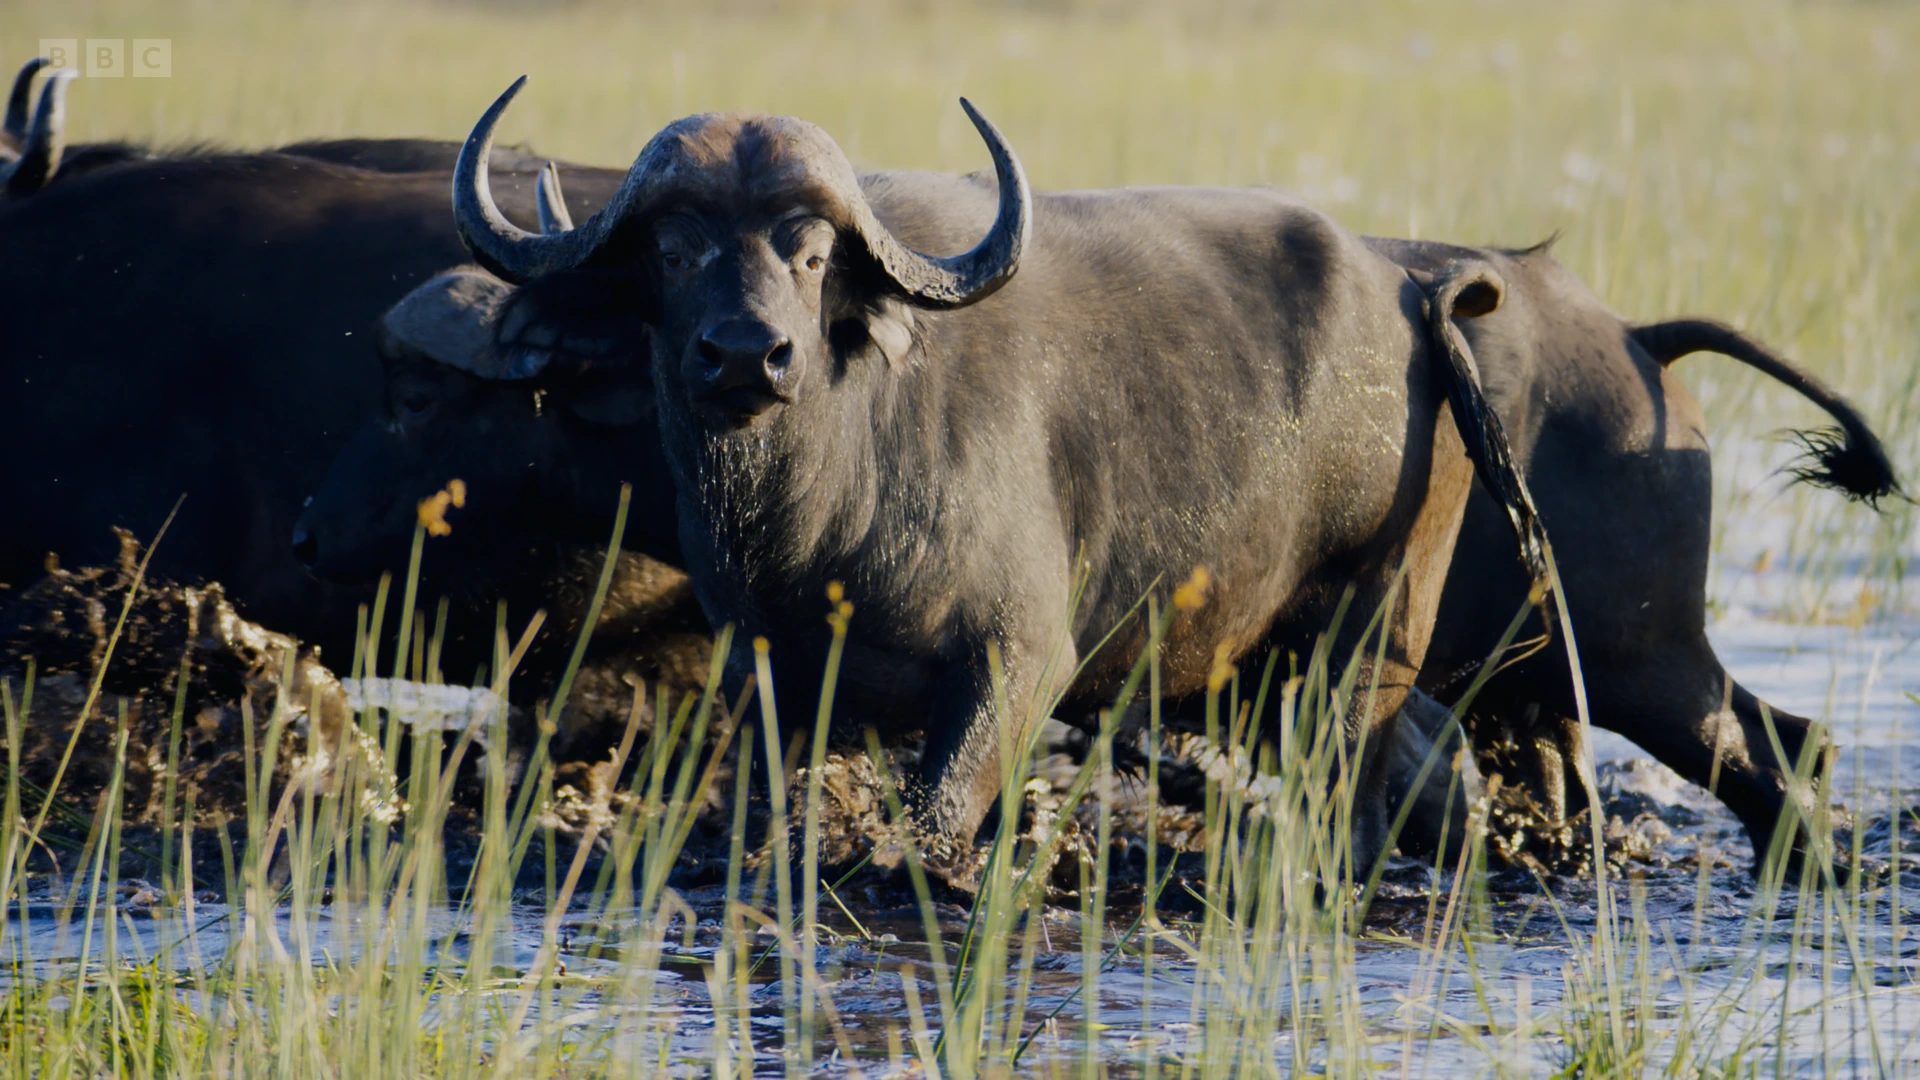 Cape buffalo (Syncerus caffer caffer) as shown in Planet Earth II - Grasslands